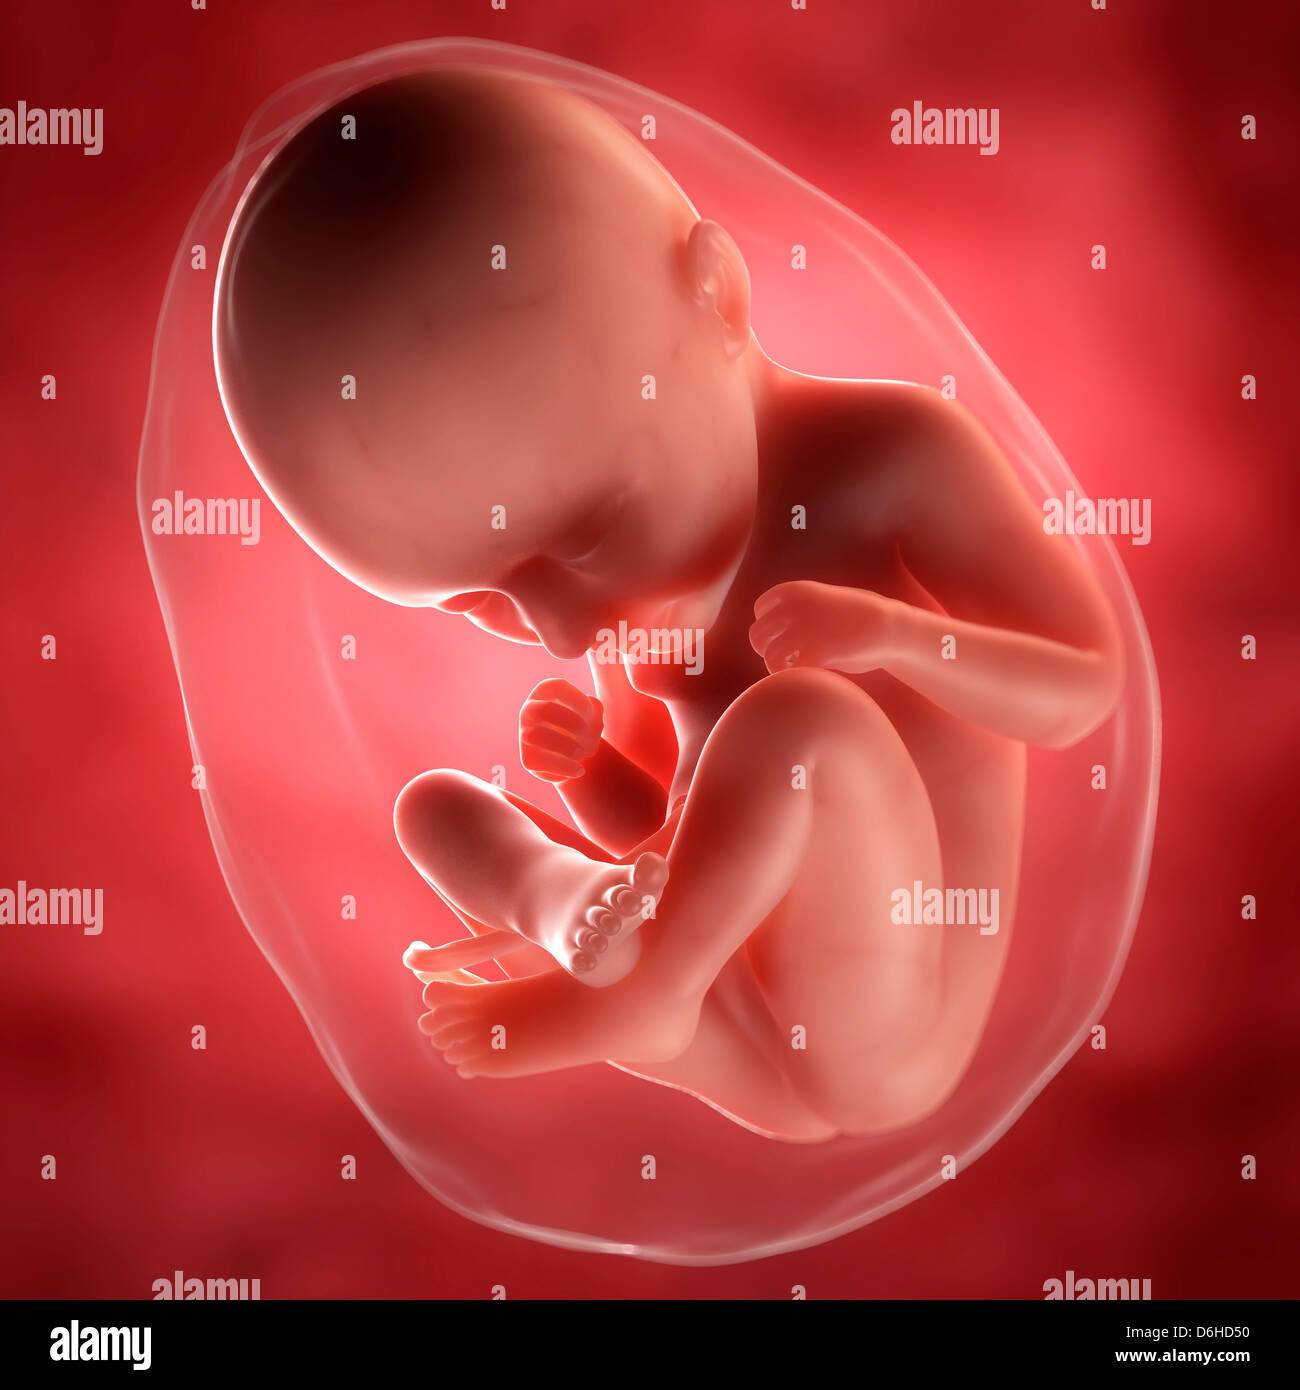 Foetus at 35 weeks, artwork Stock Photo